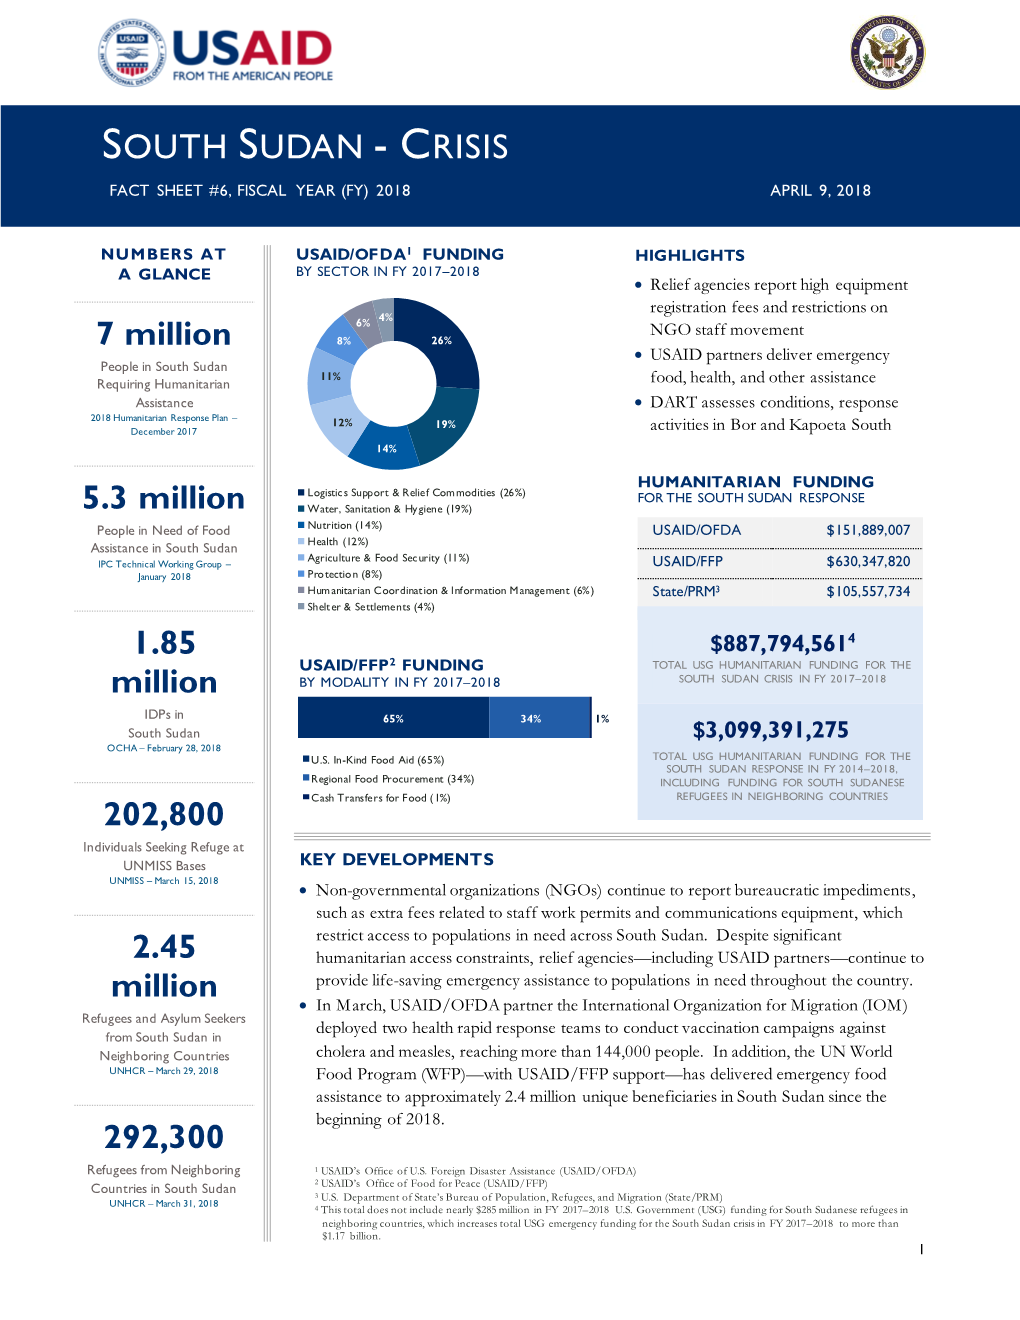 South Sudan Crisis Fact Sheet #6